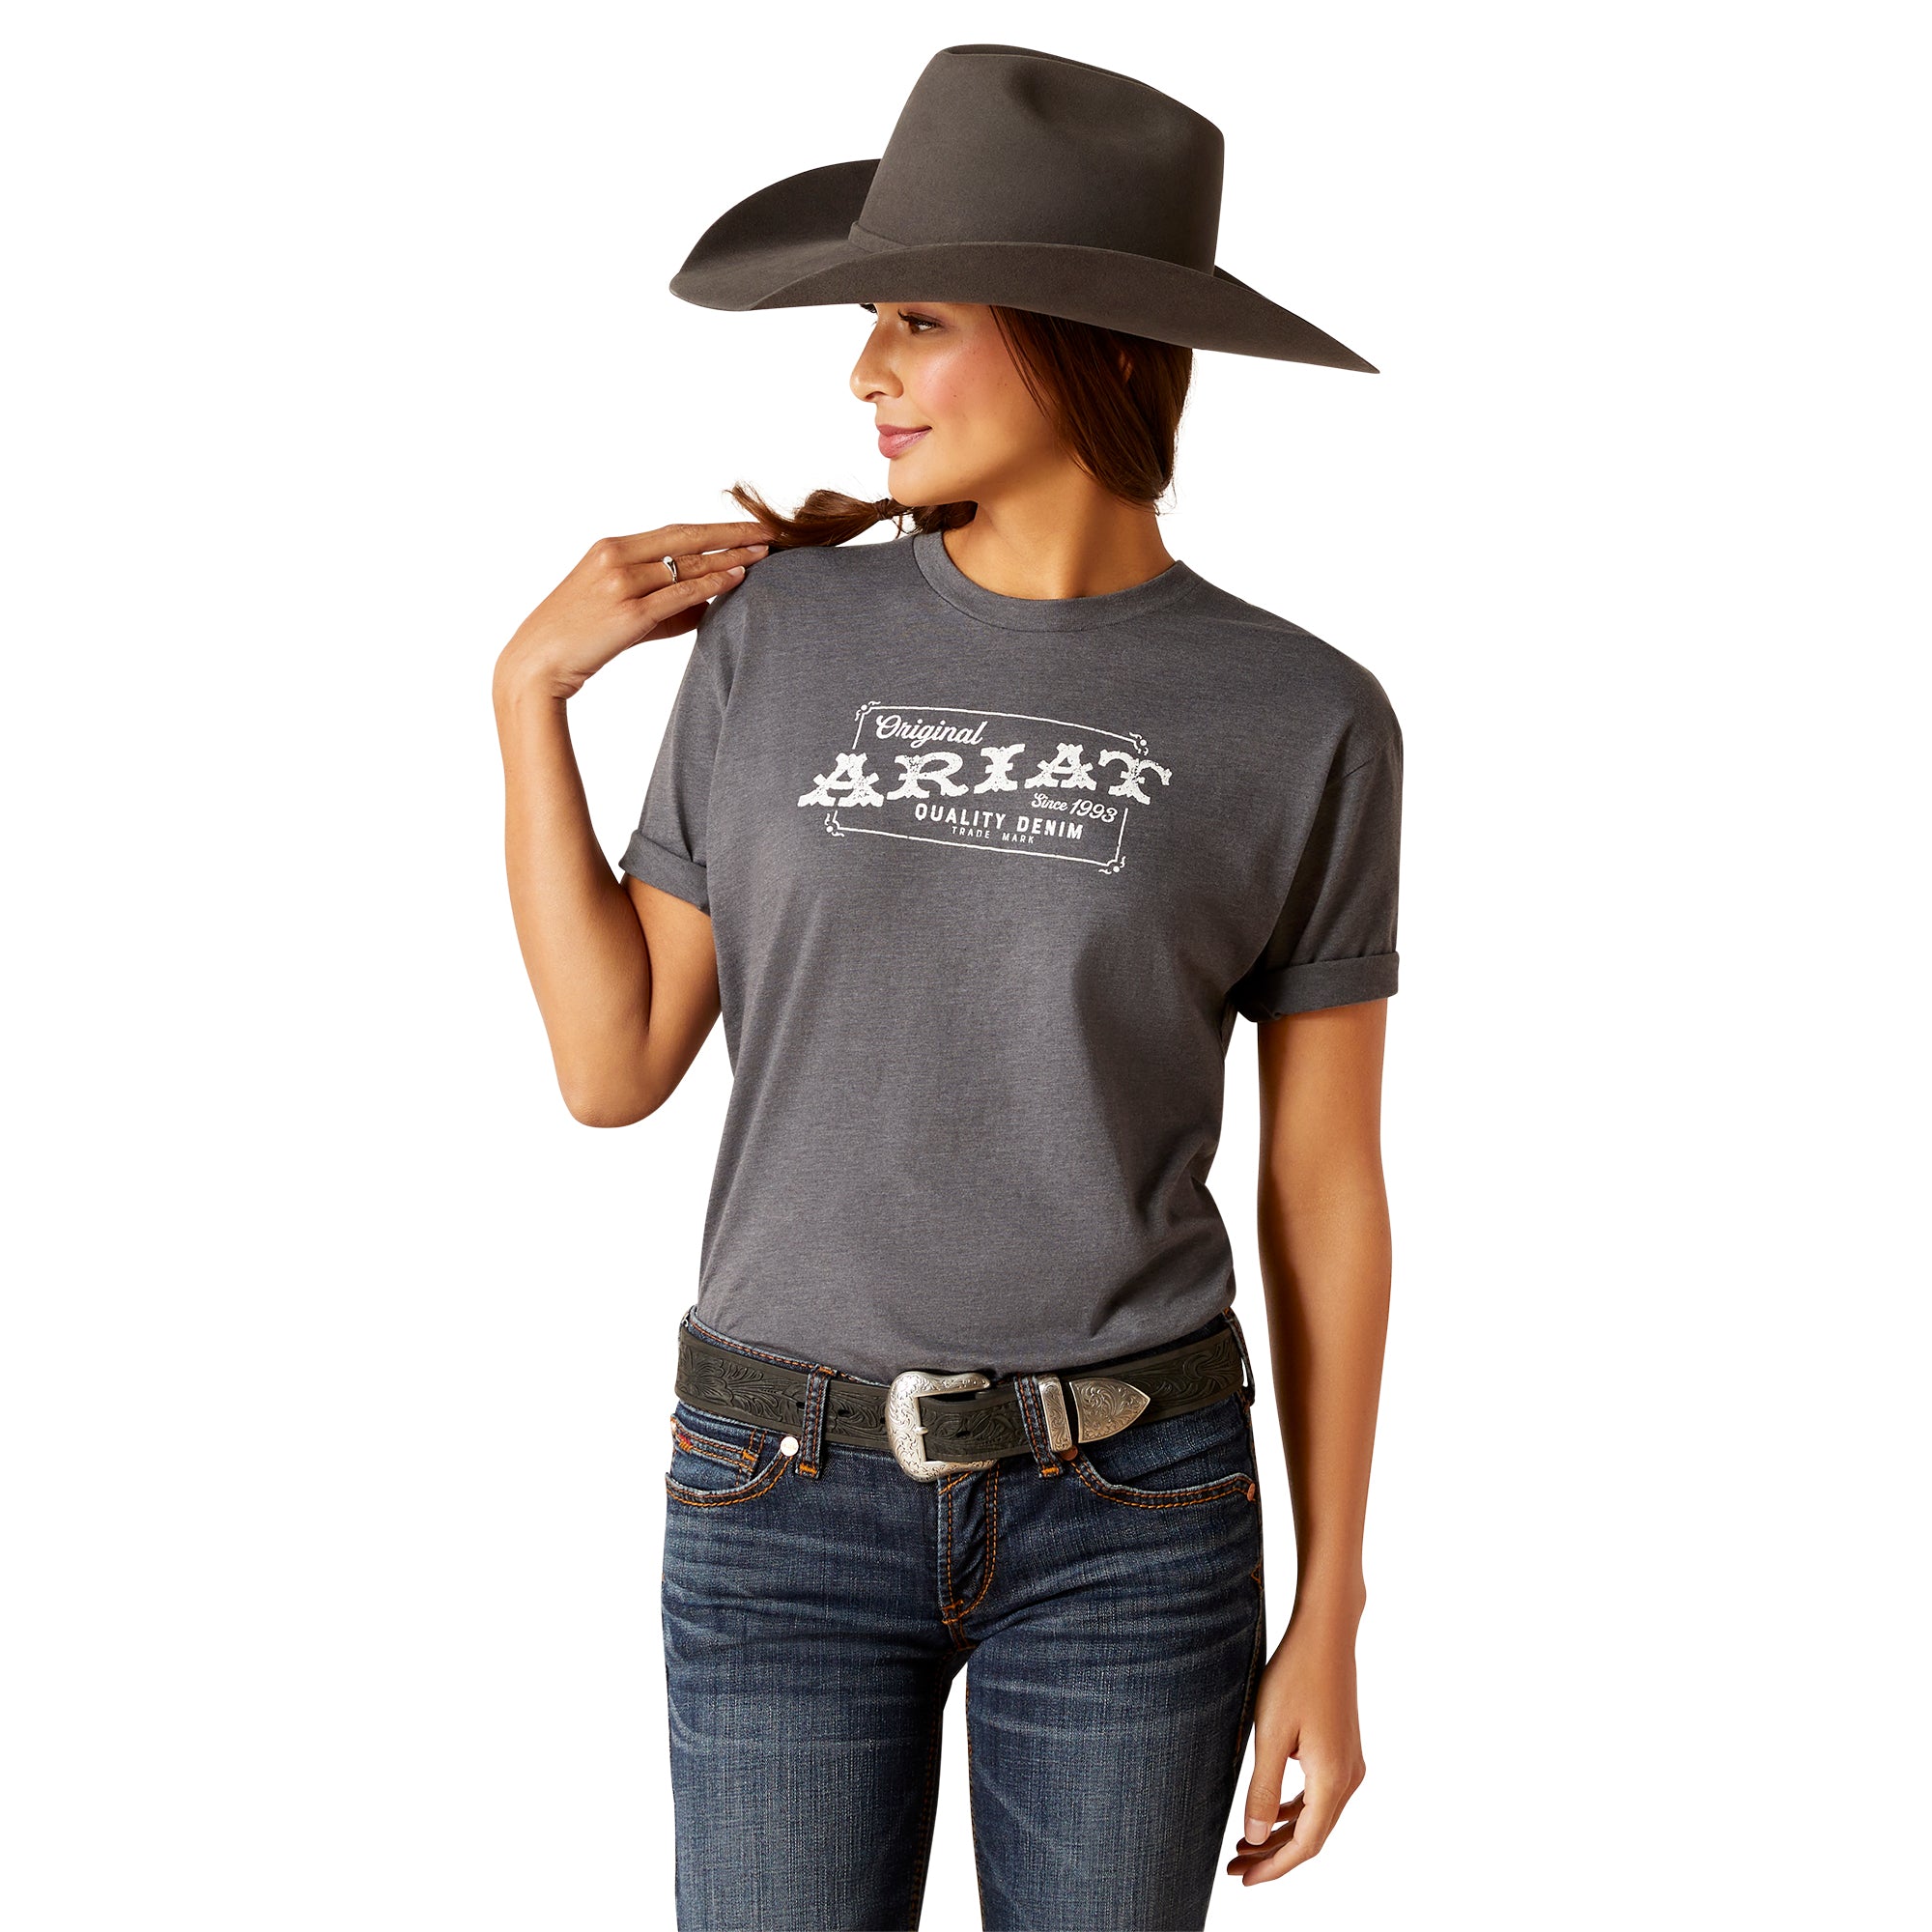 Ariat Women's Ariat Denim Label T-Shirt, Grey